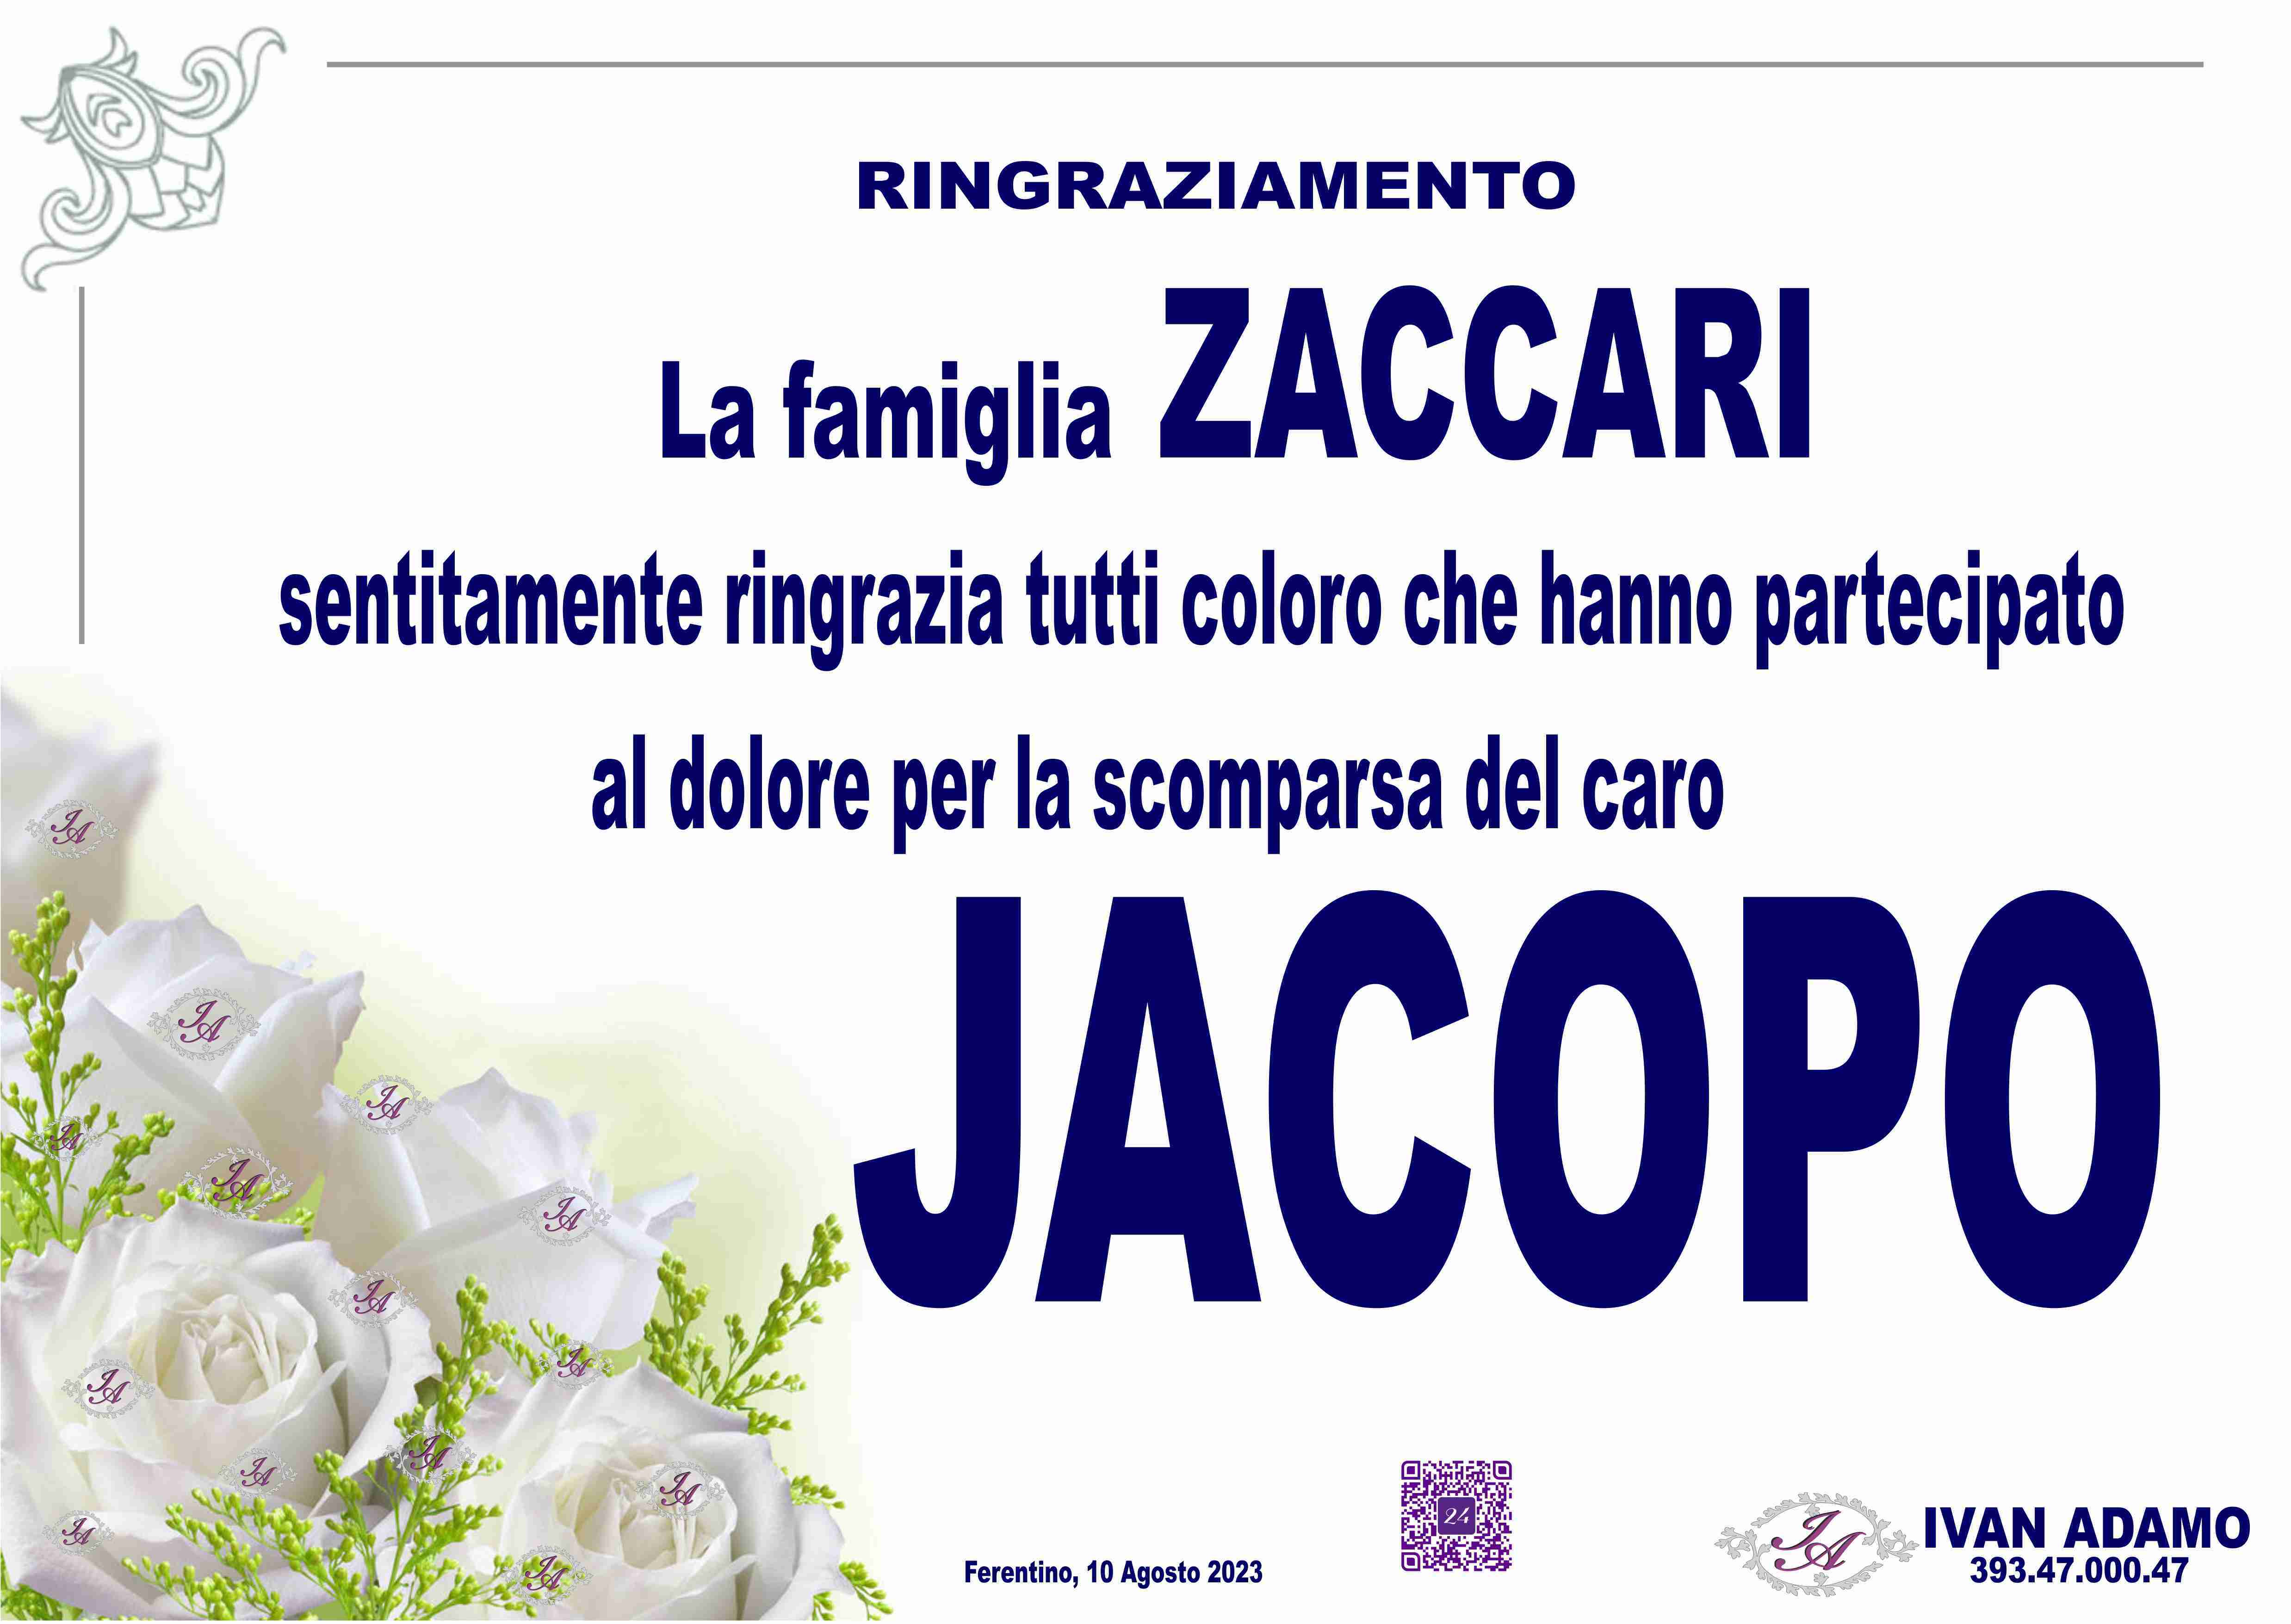 Jacopo Datti